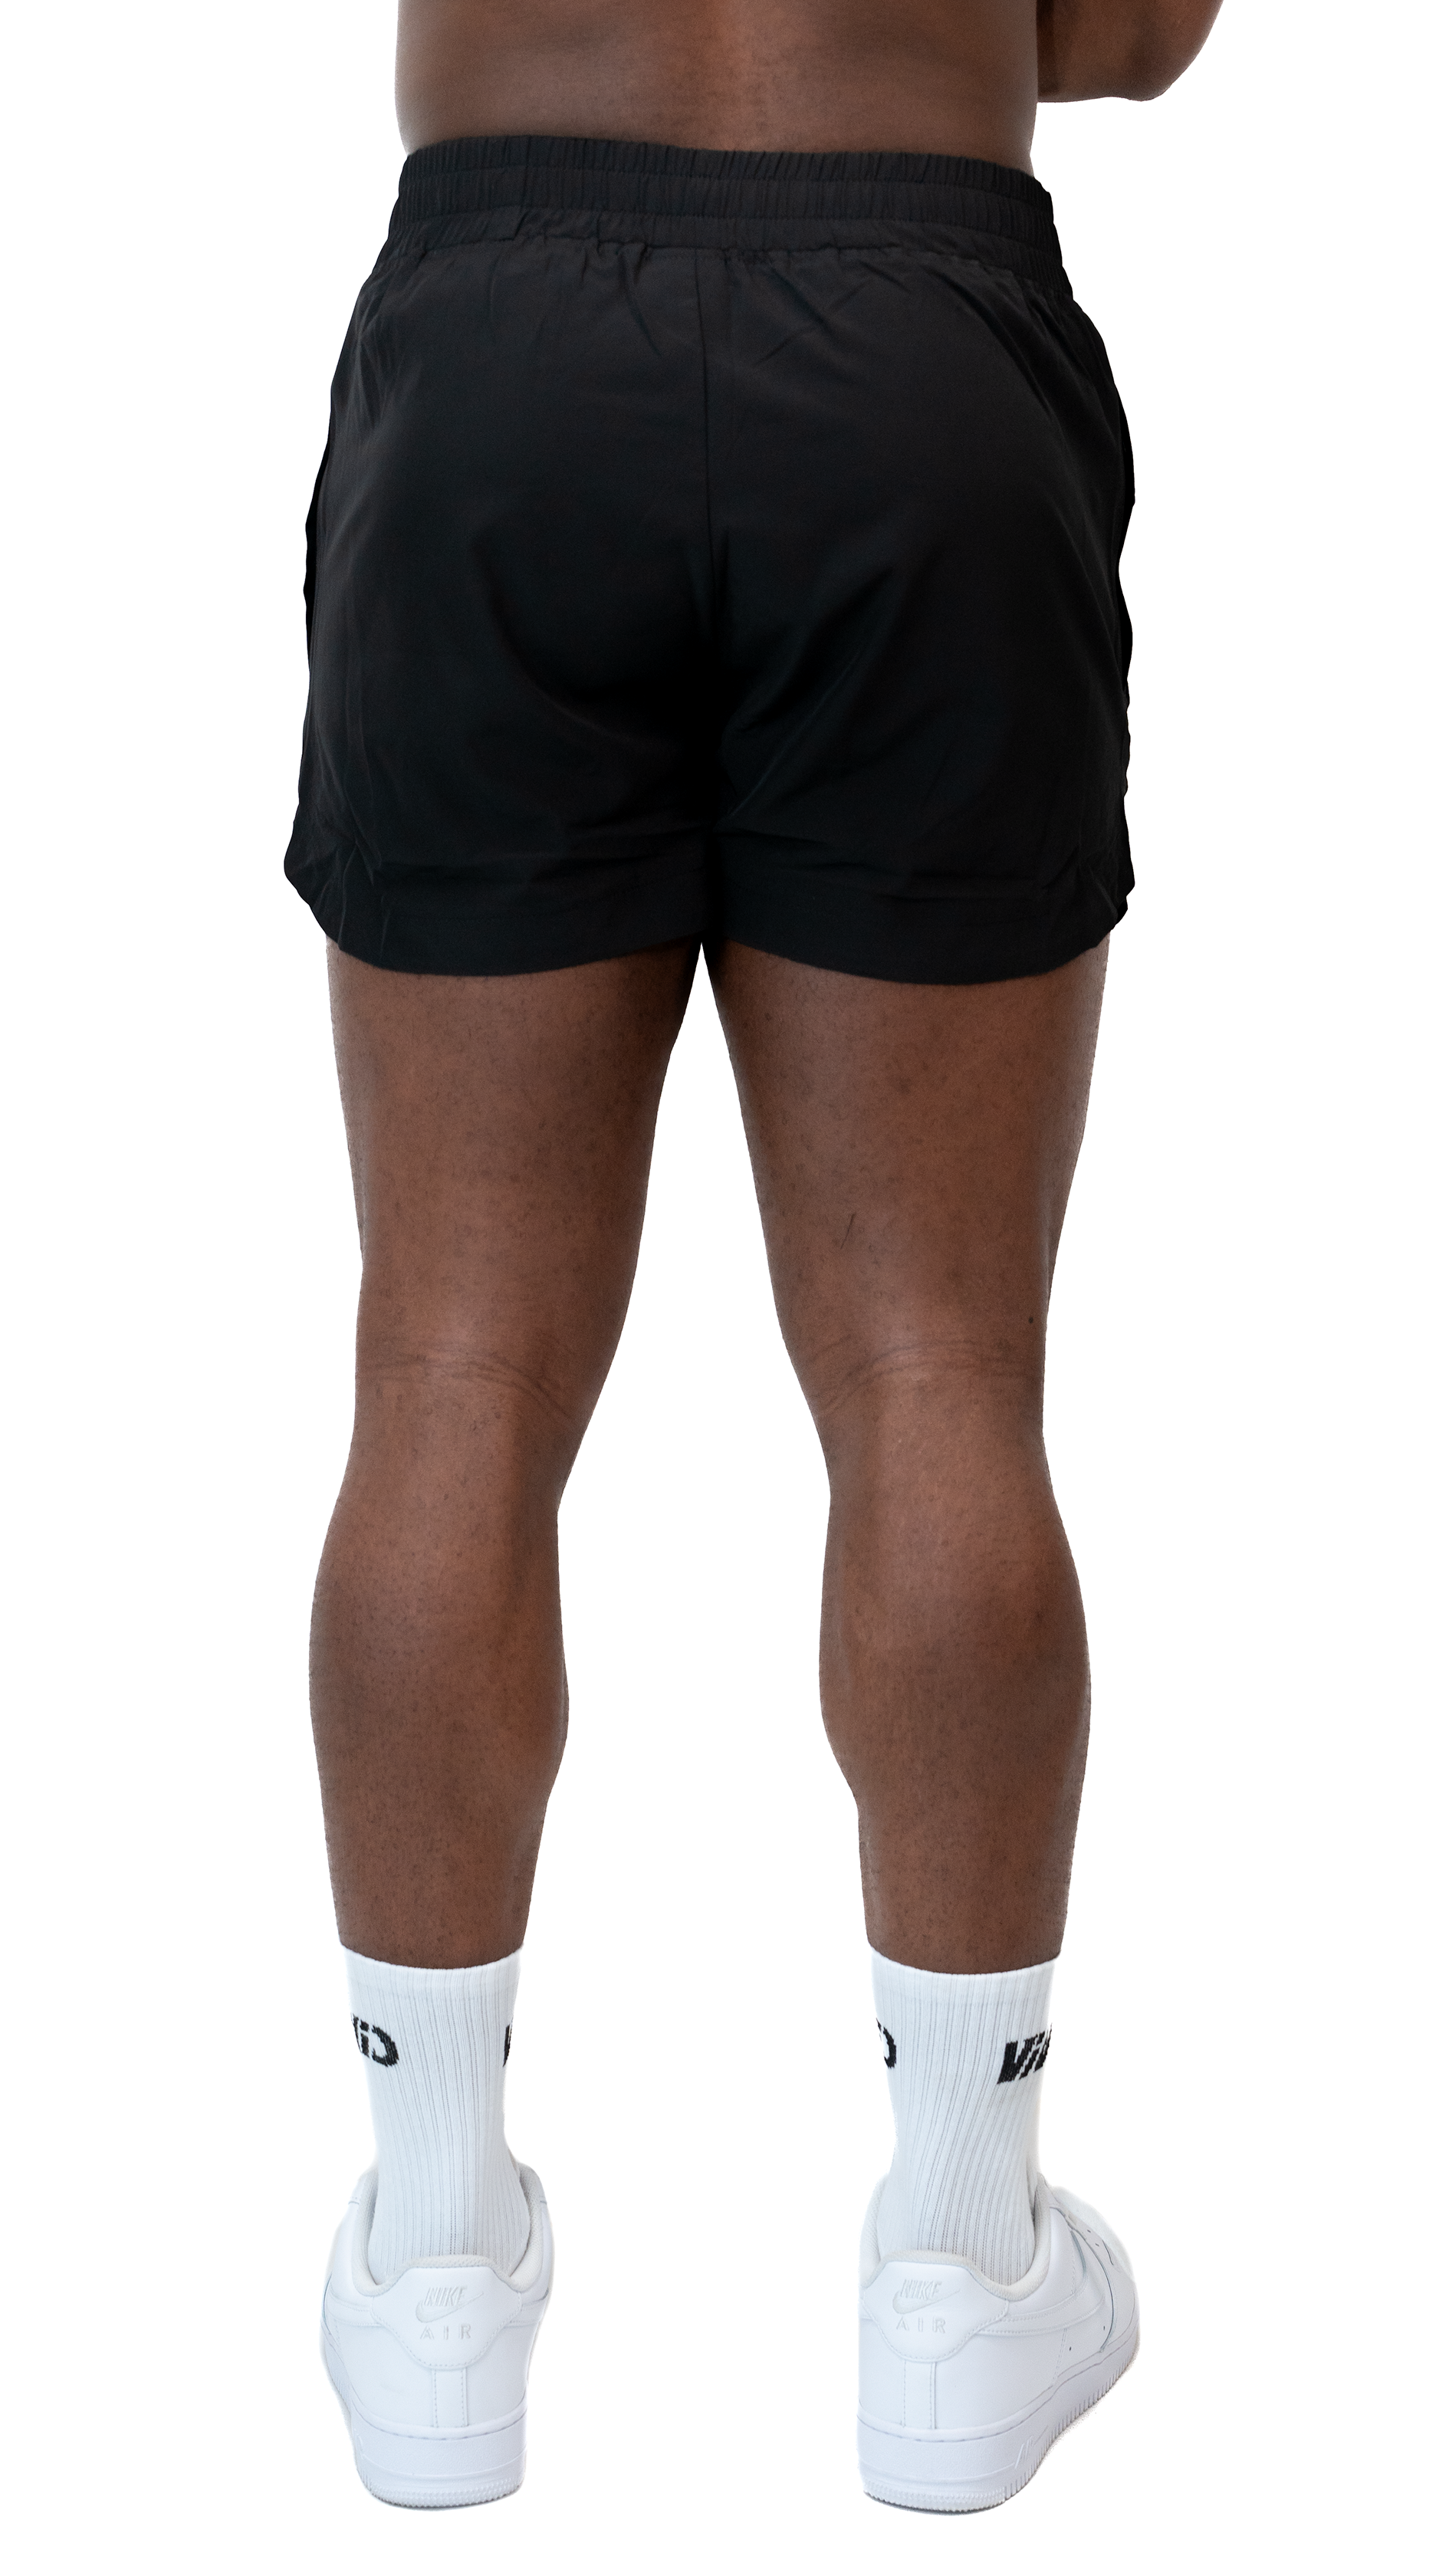 7 Inch Quad Shorts - Black